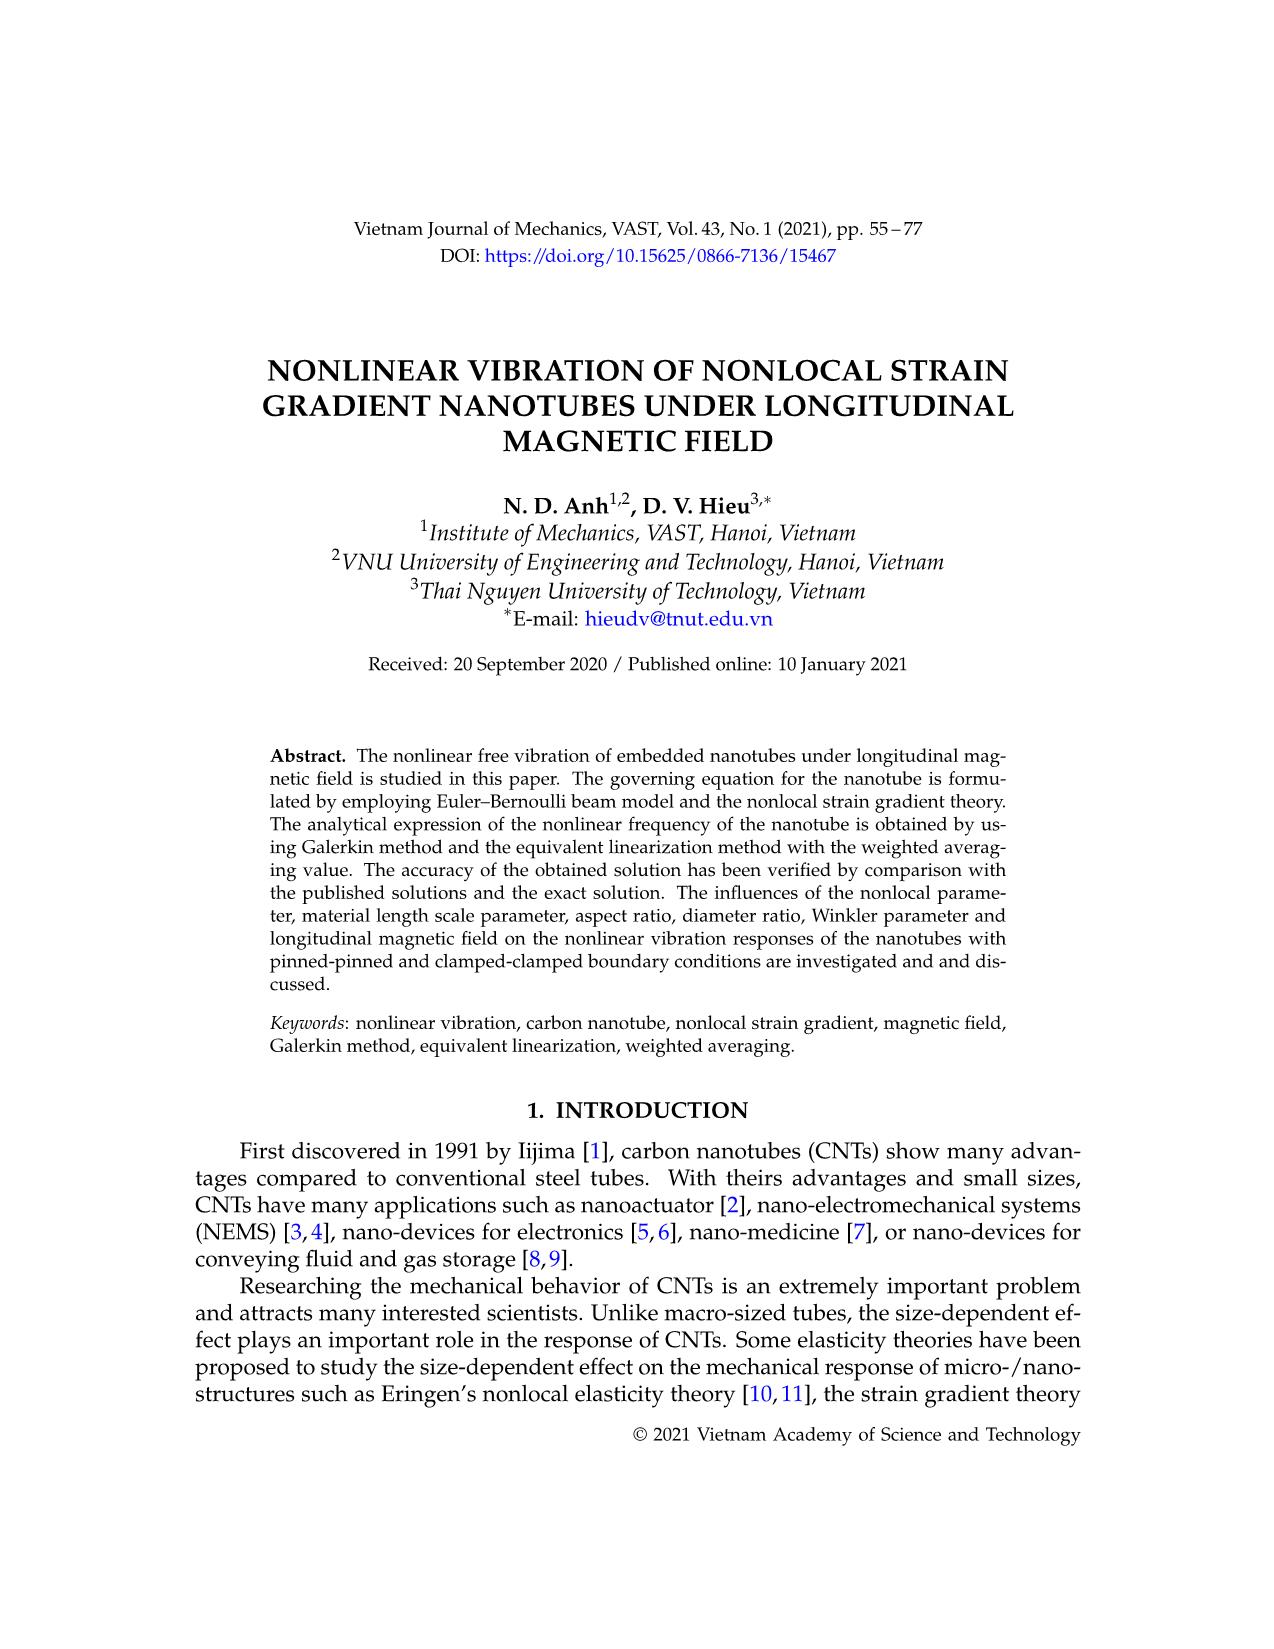 Nonlinear vibration of nonlocal strain gradient nanotubes under longitudinal magnetic field trang 1